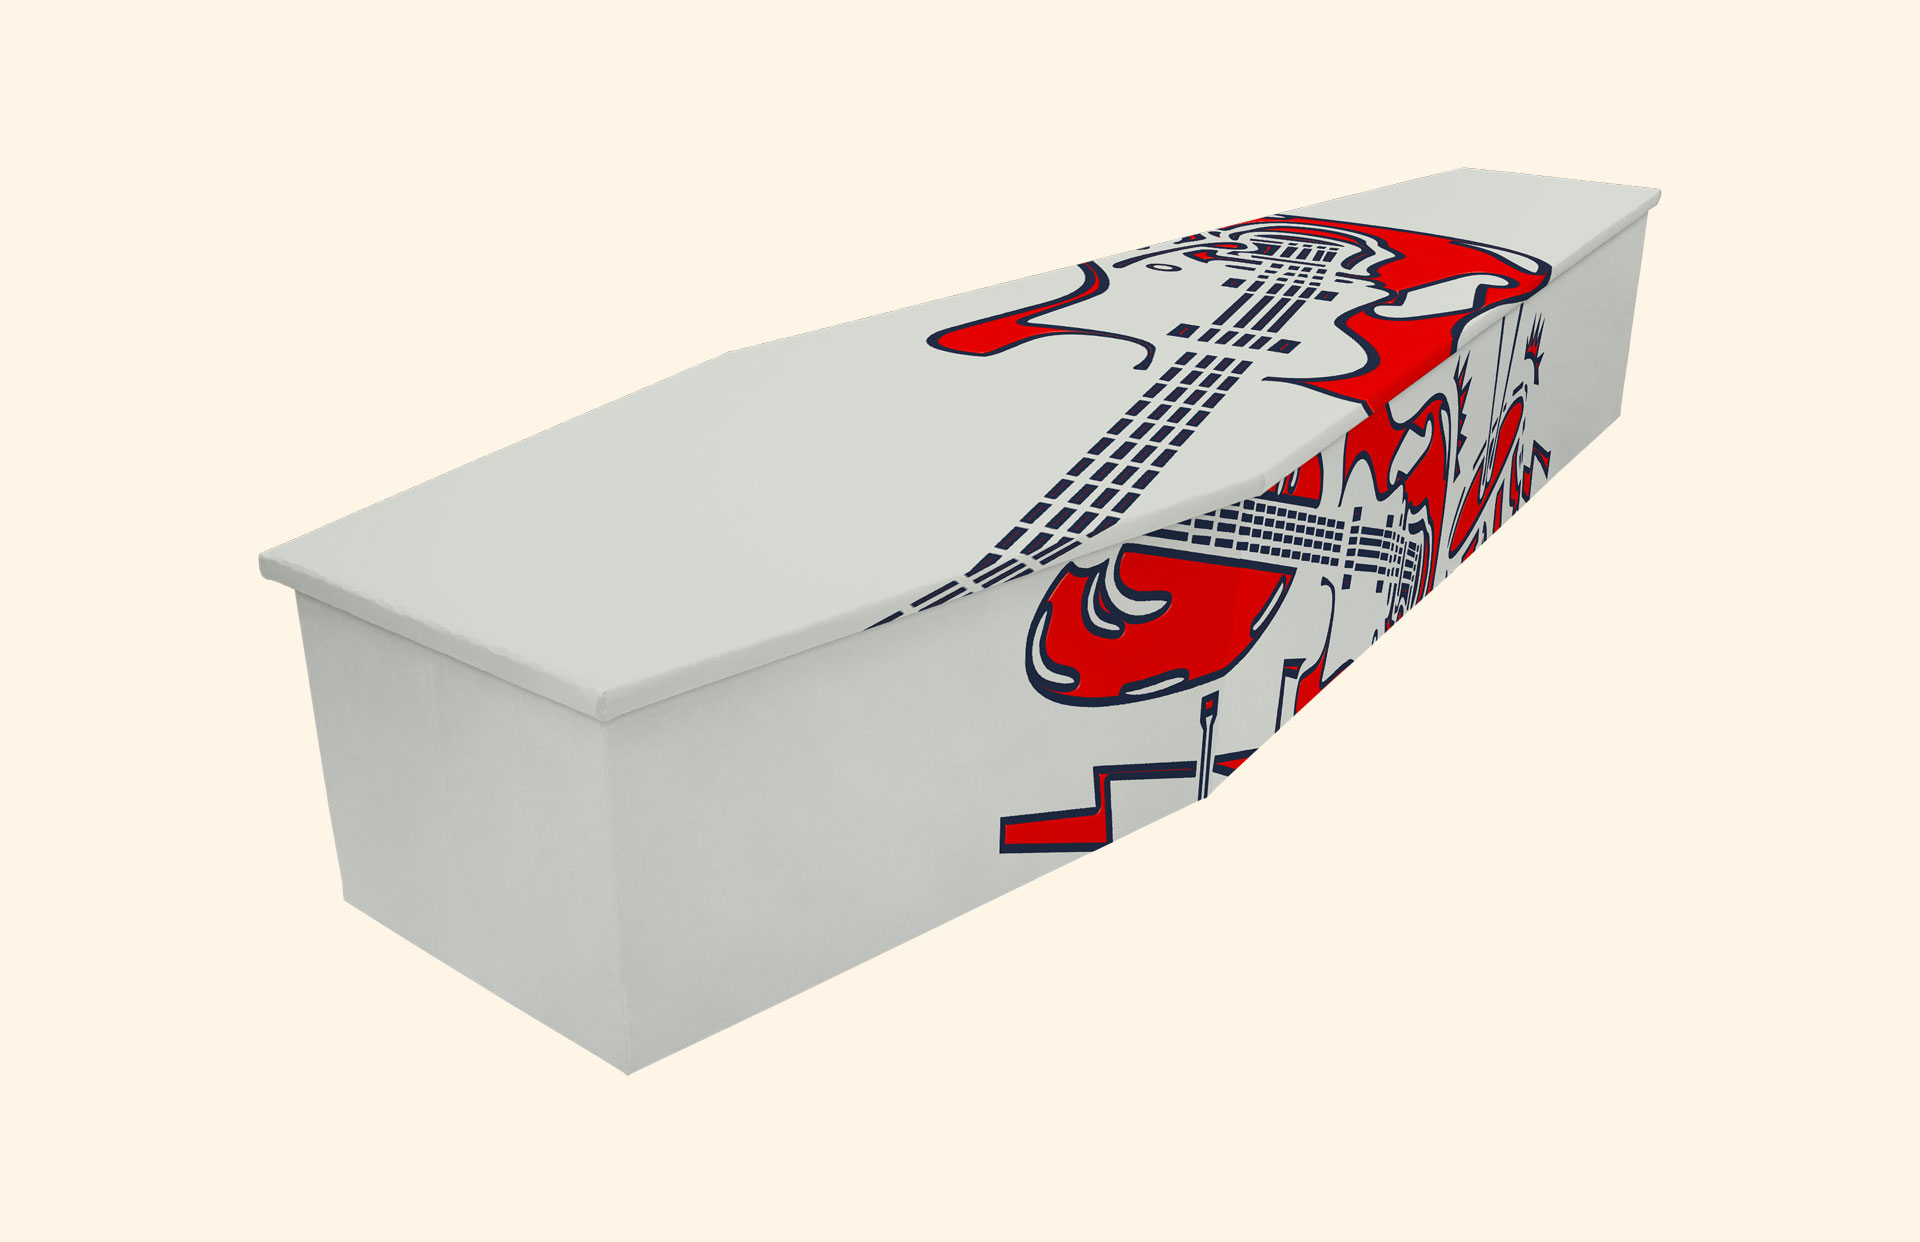 Rock n Roll Red design on a cardboard coffin